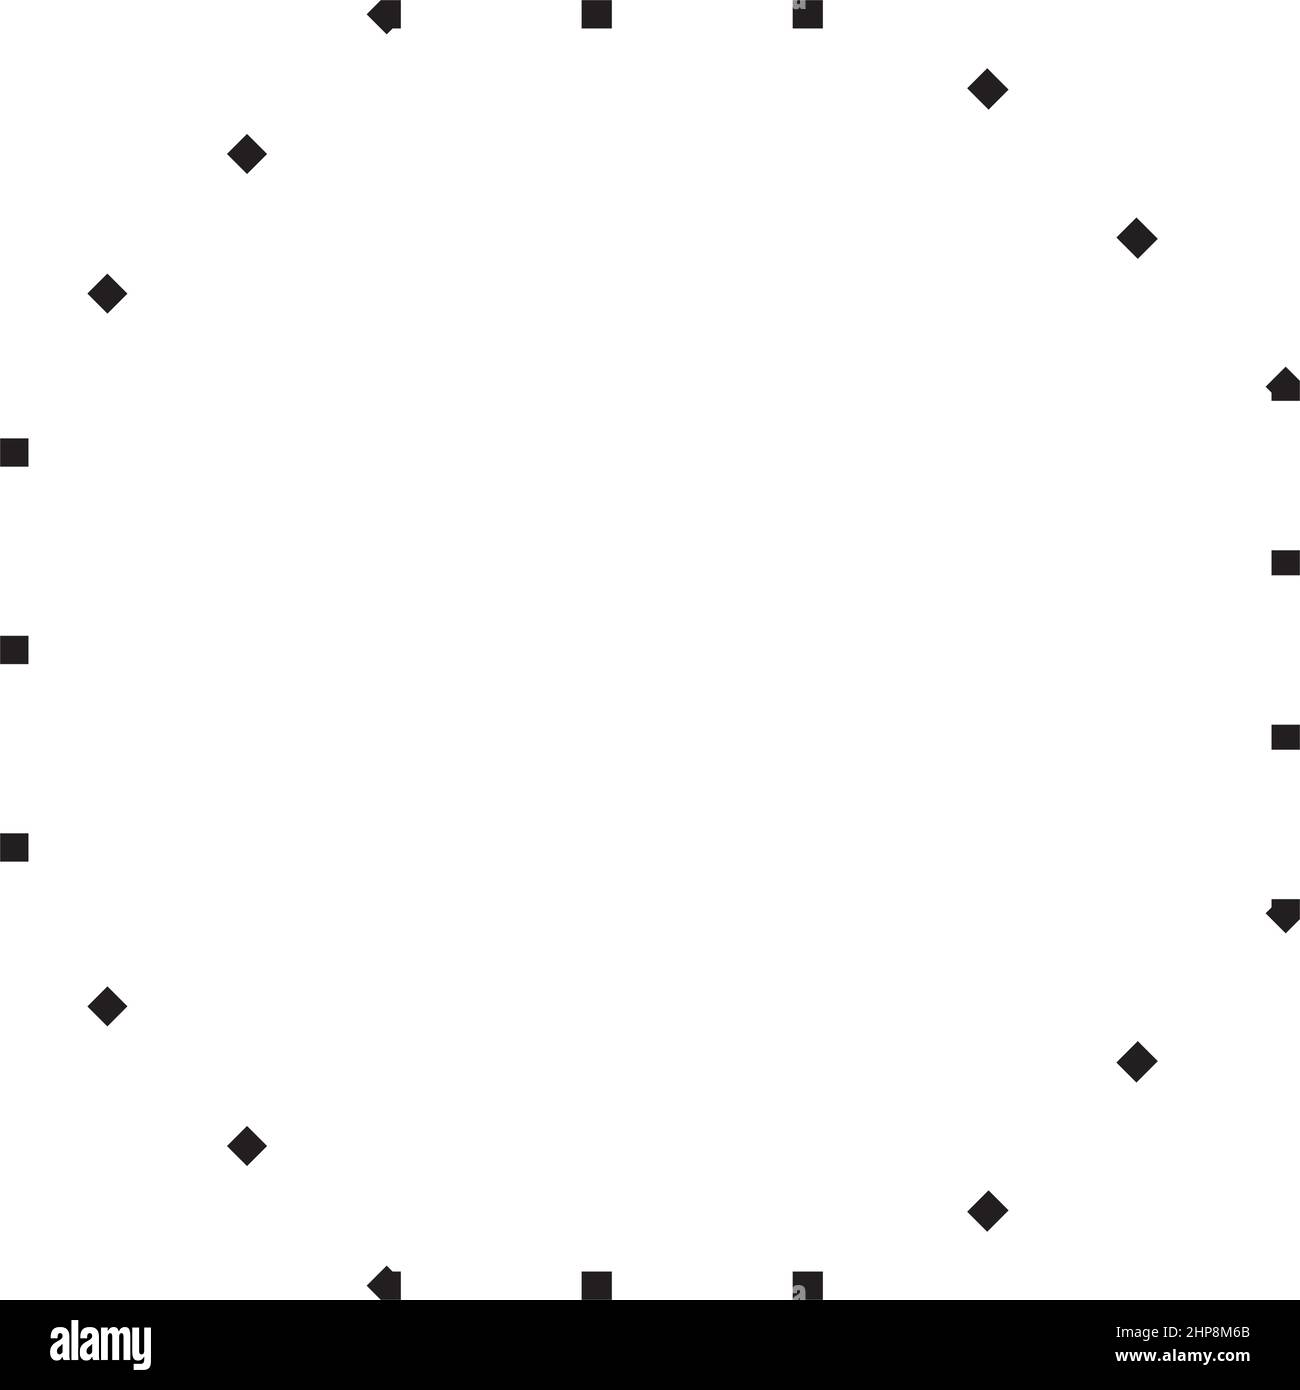 Eckige Form gestrichelte Symbol Vektor-Symbol für kreative Grafik-Design-ui-Element in einem Piktogramm Illustration Stock Vektor